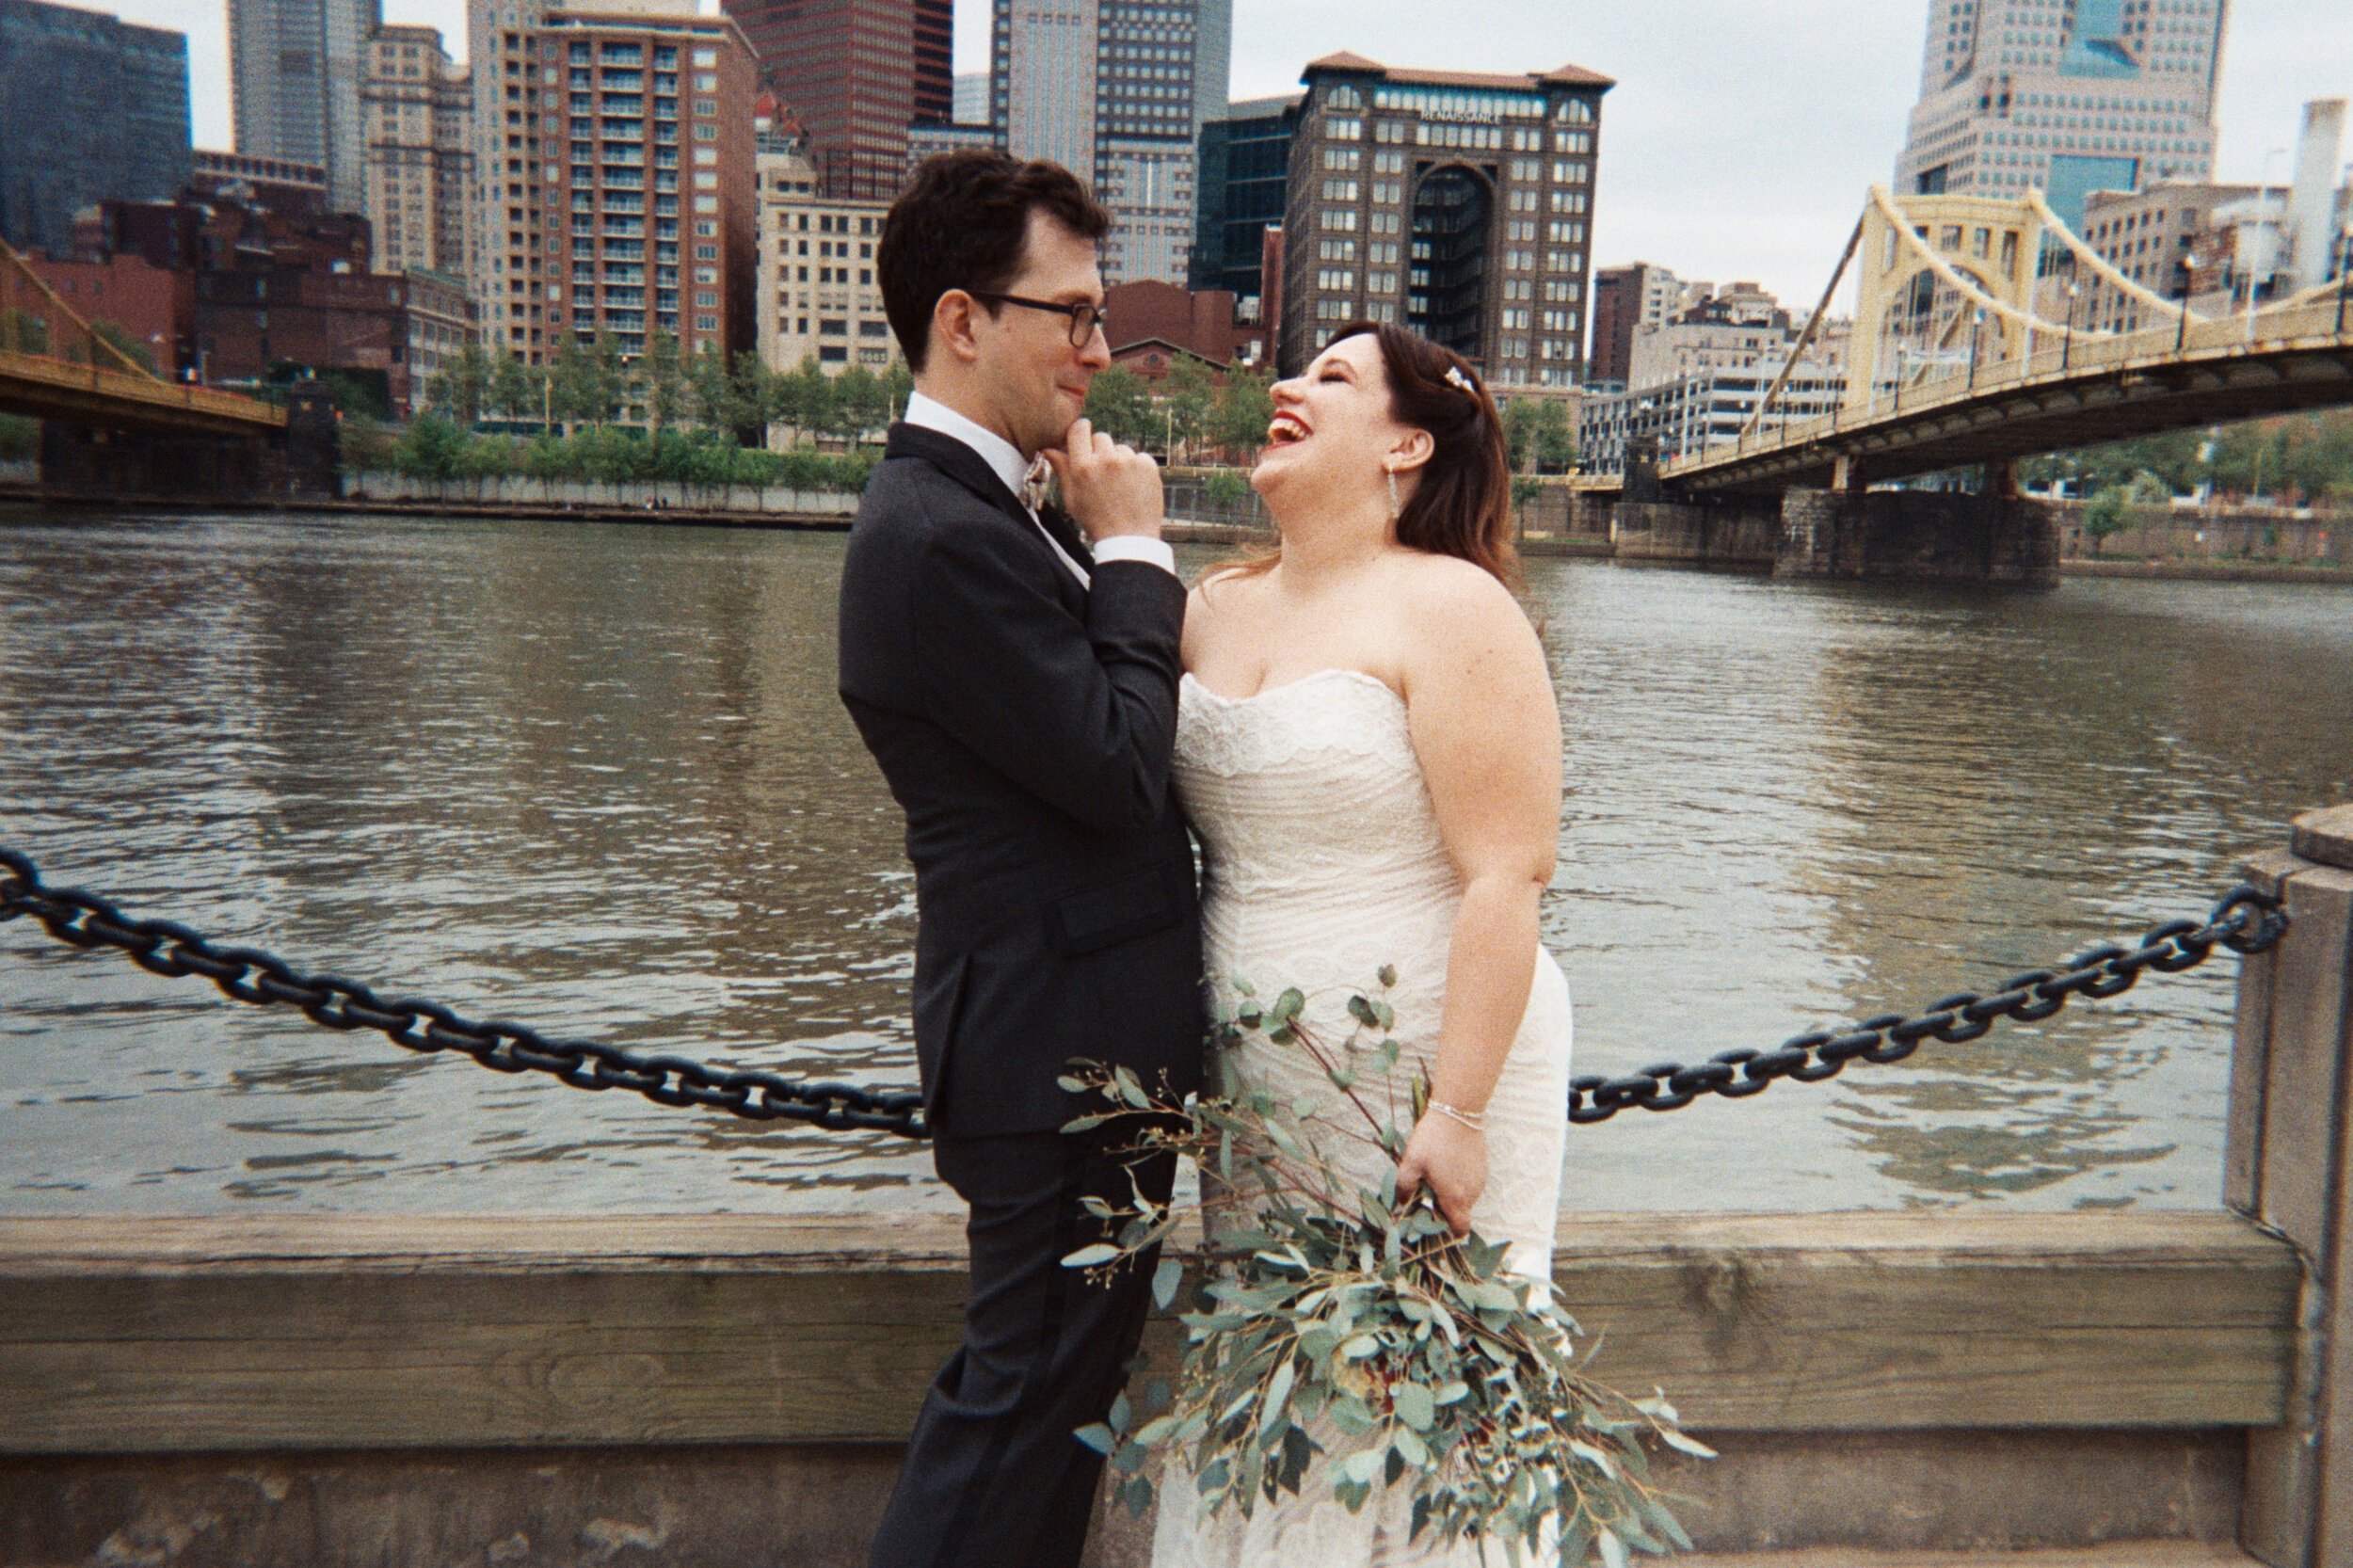 Pittsburgh NYC Film Wedding Photographer - Rat Lab - Lawrenceville - Stephanie Dave127.jpg